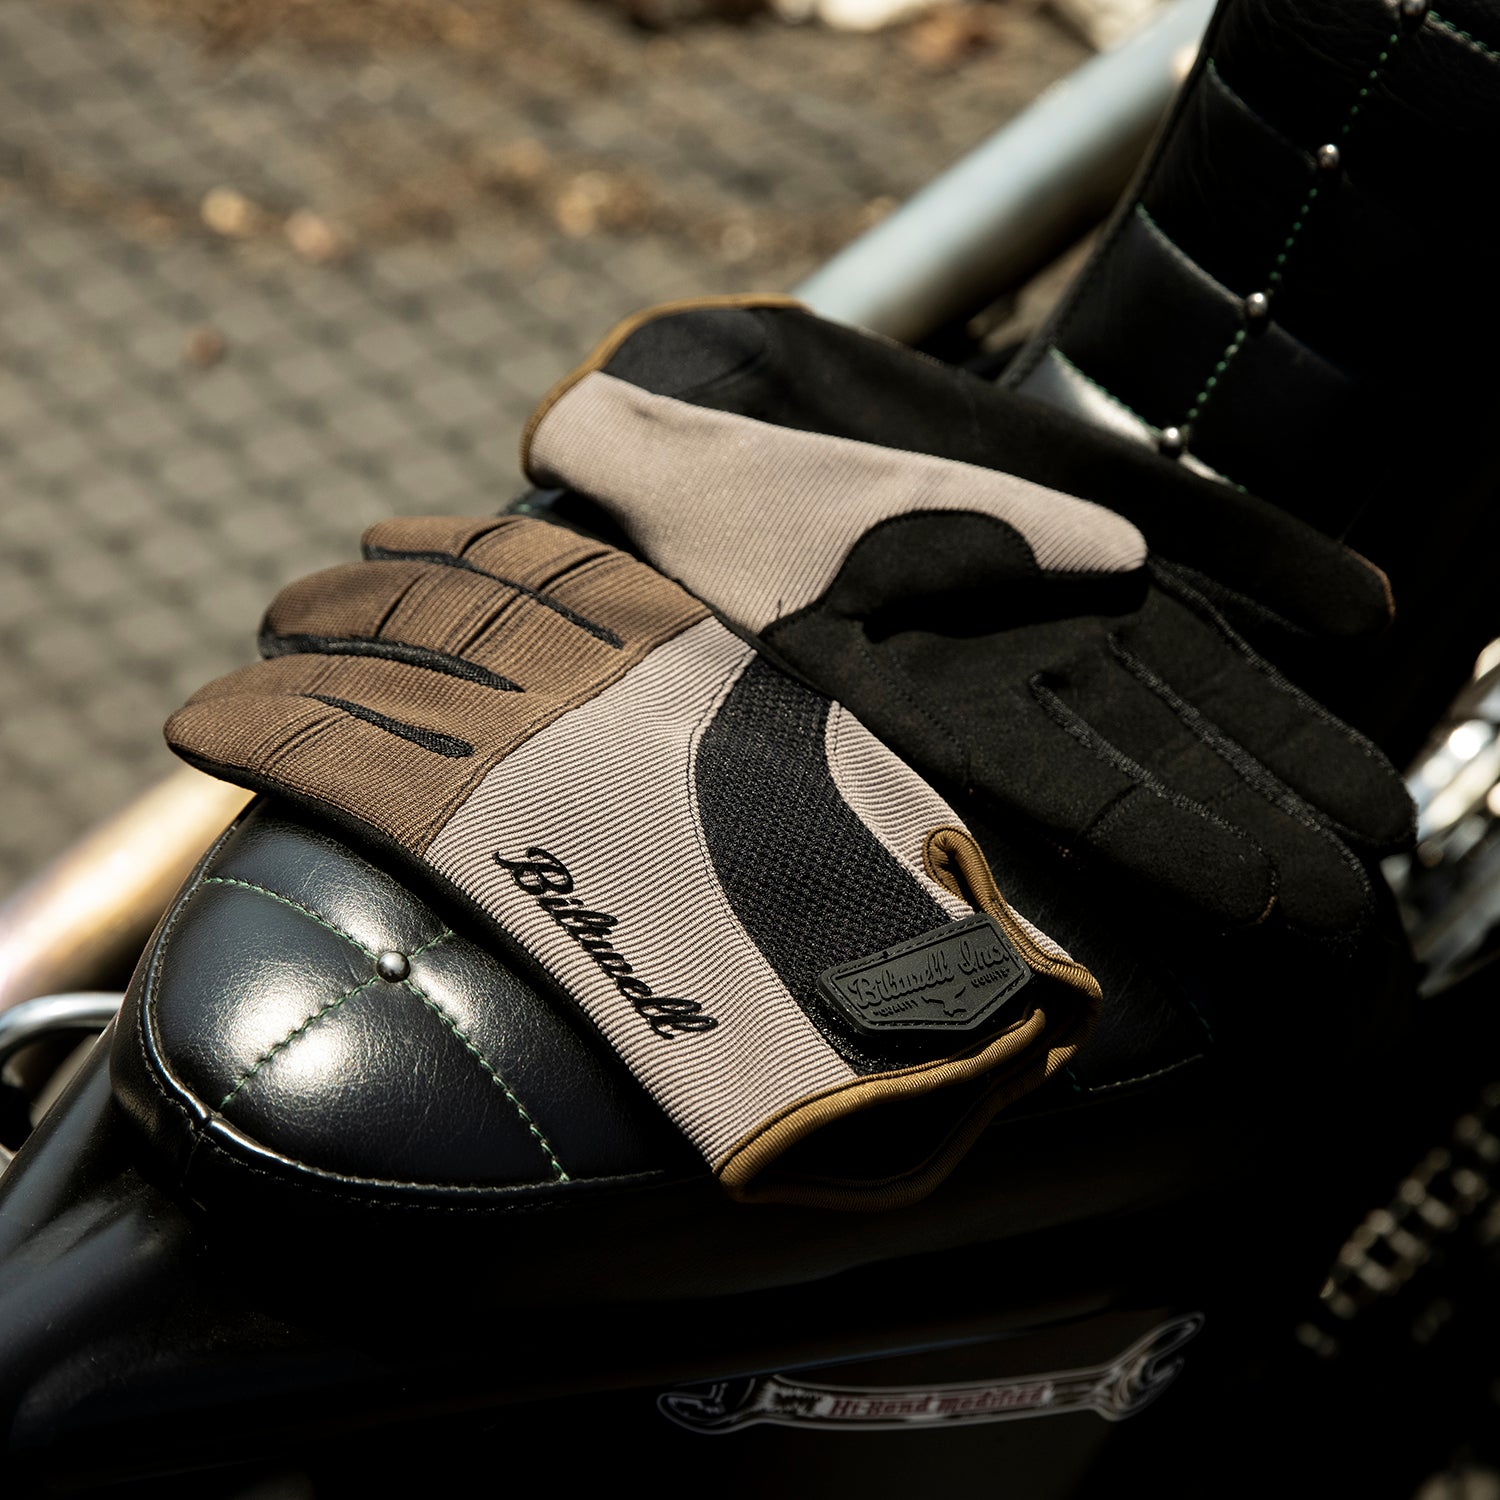 Moto Gloves - Coyote/Black